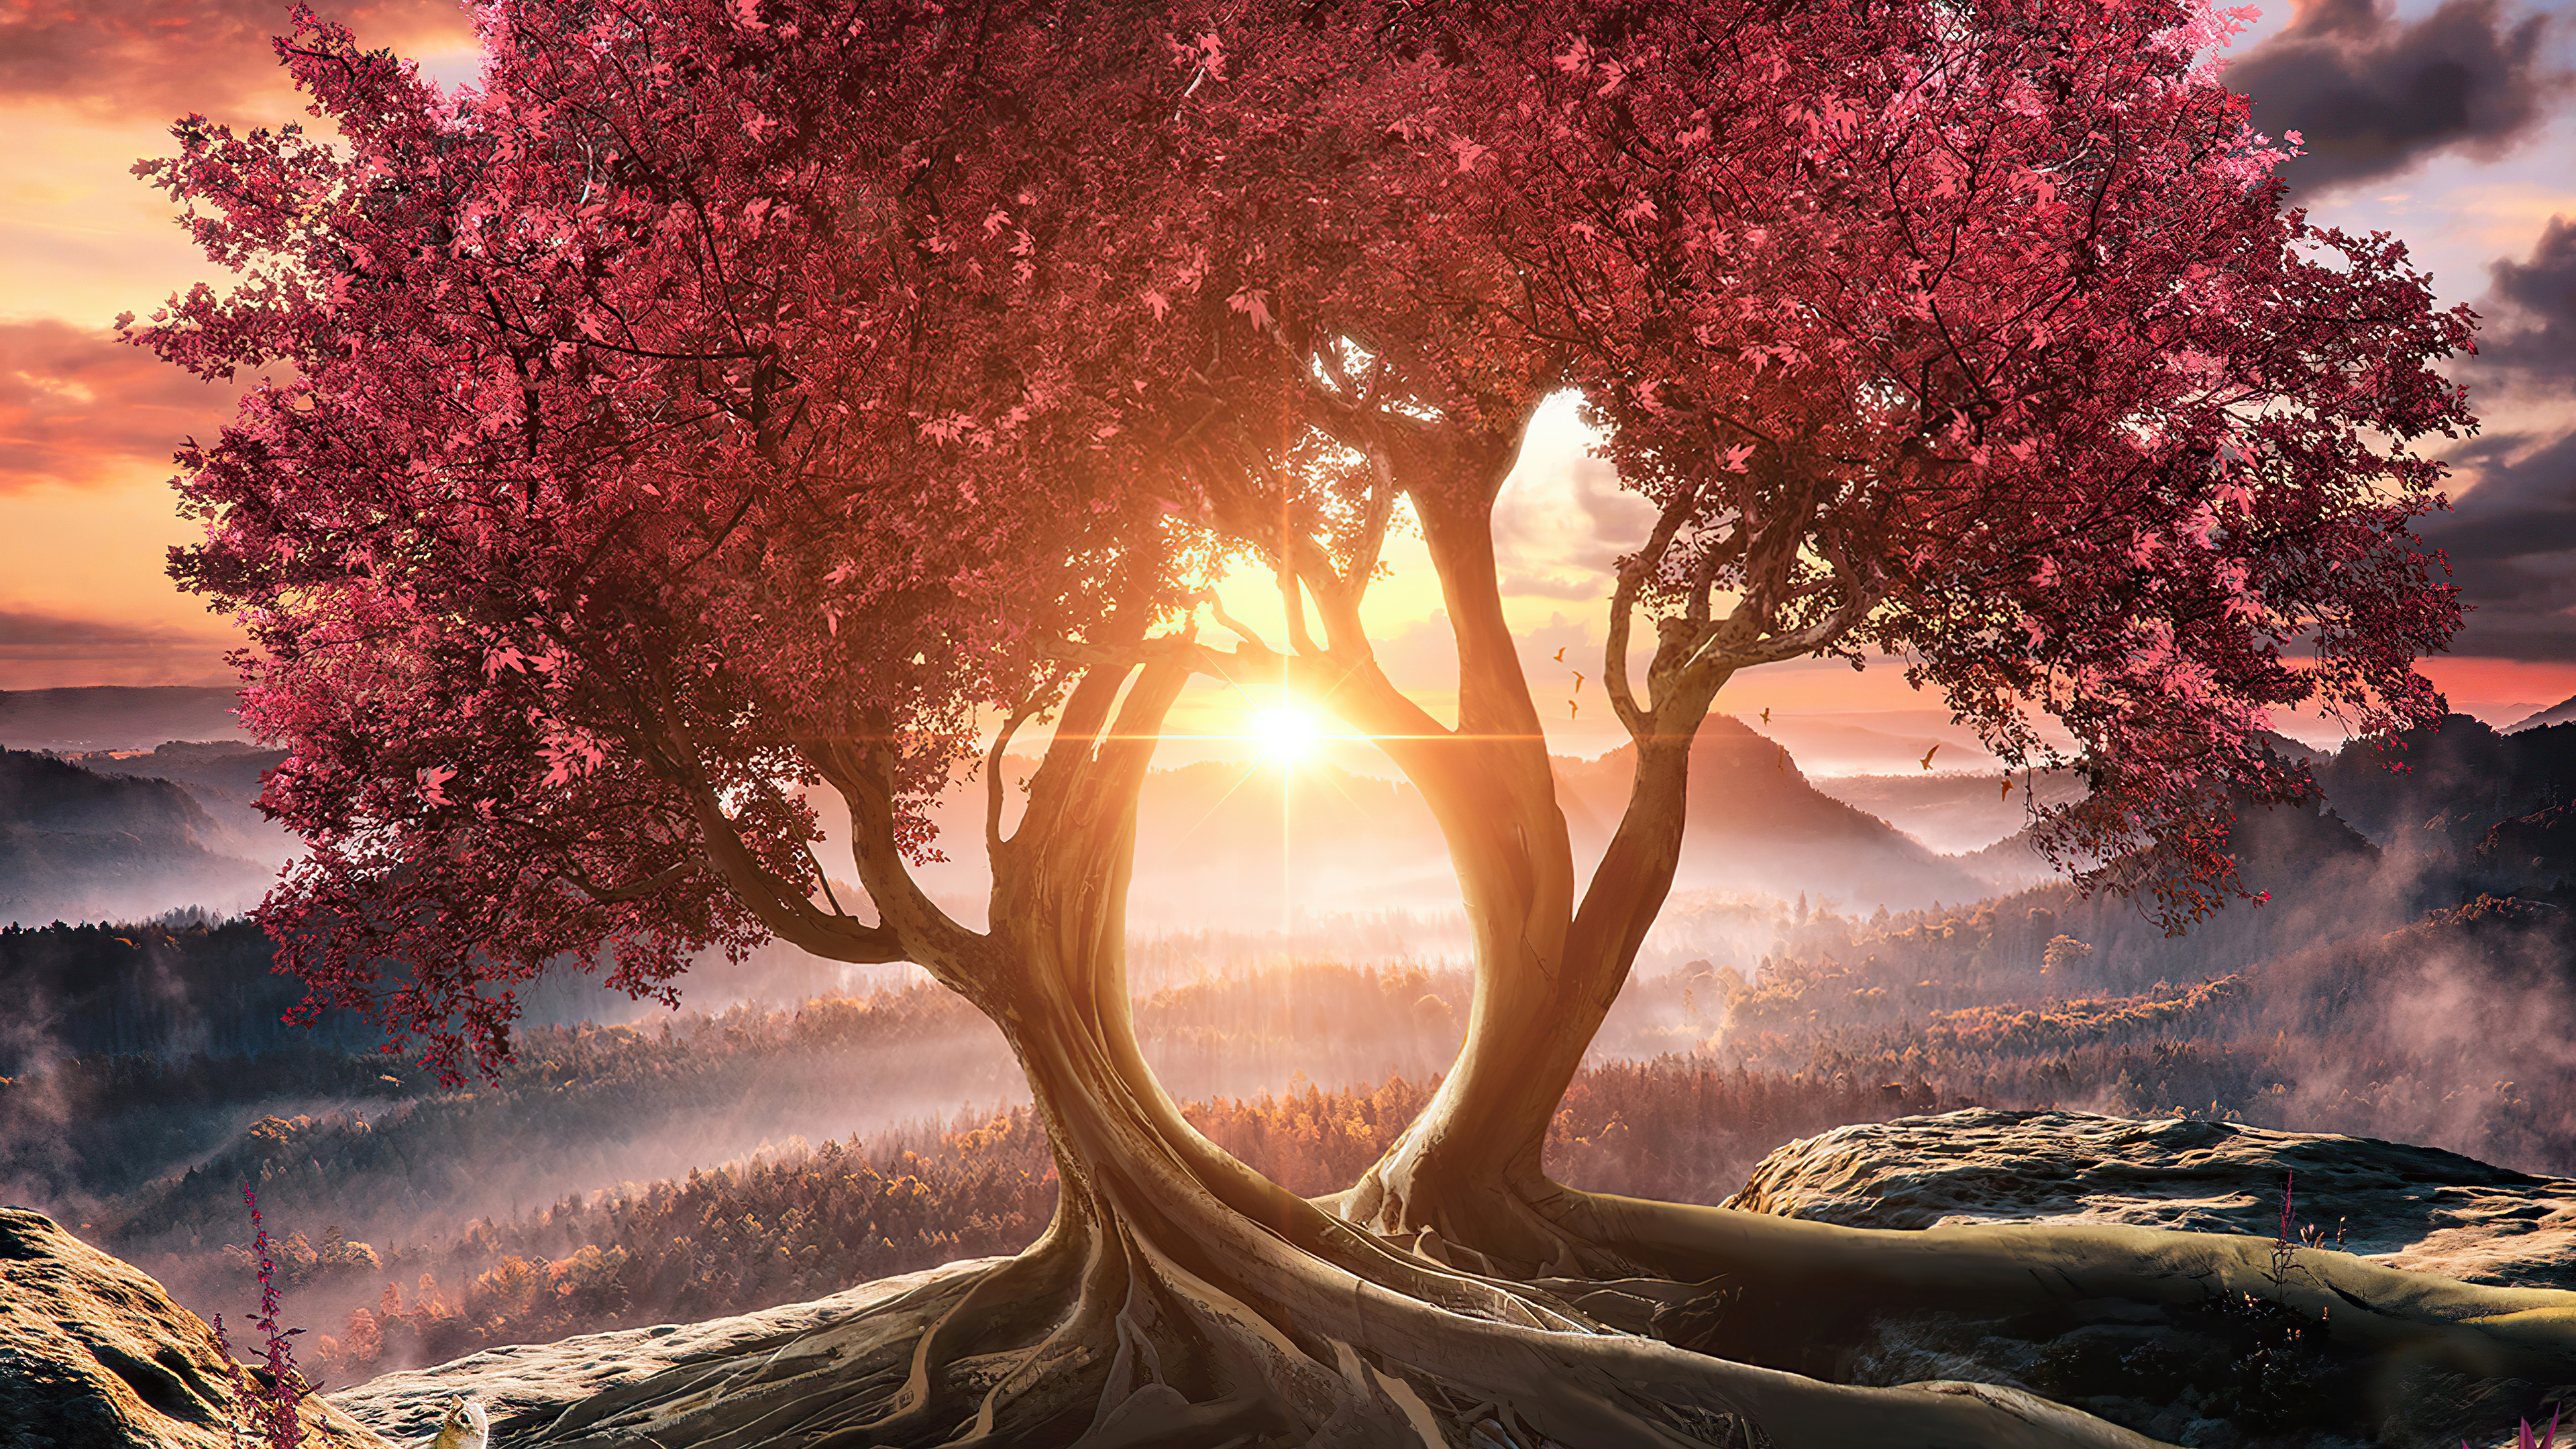 Wallpapers sunset rendering tree on the desktop